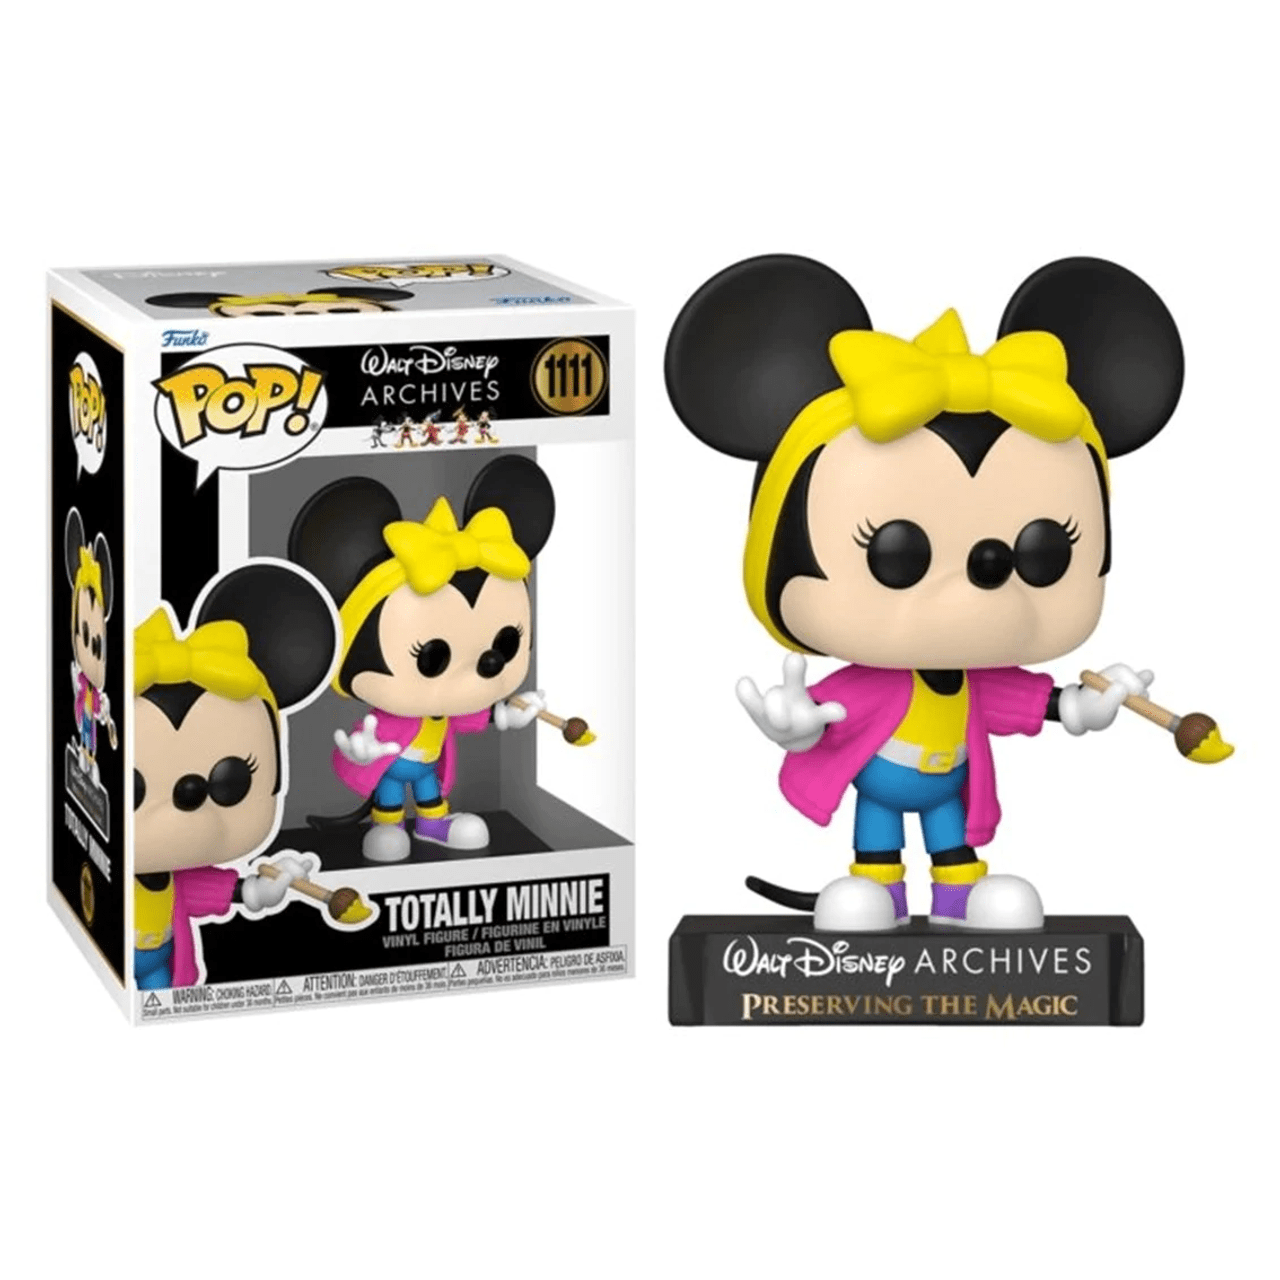 Funko Pop!: Walt Disney Archives - Totally Minnie (1988)